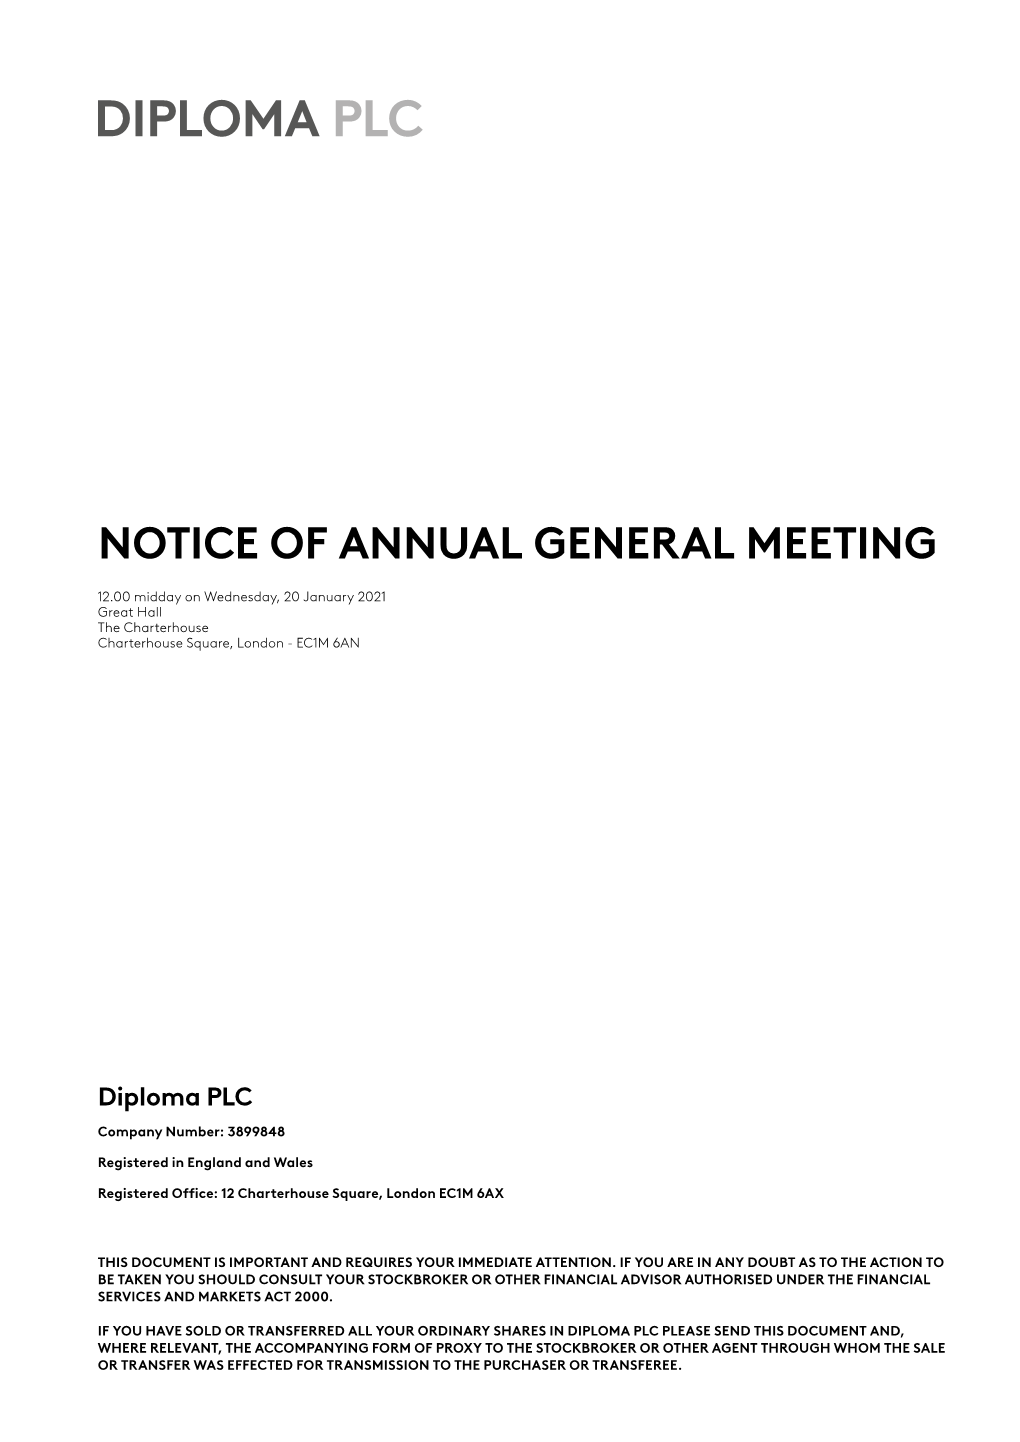 AGM Circular and Notice of AGM 2021